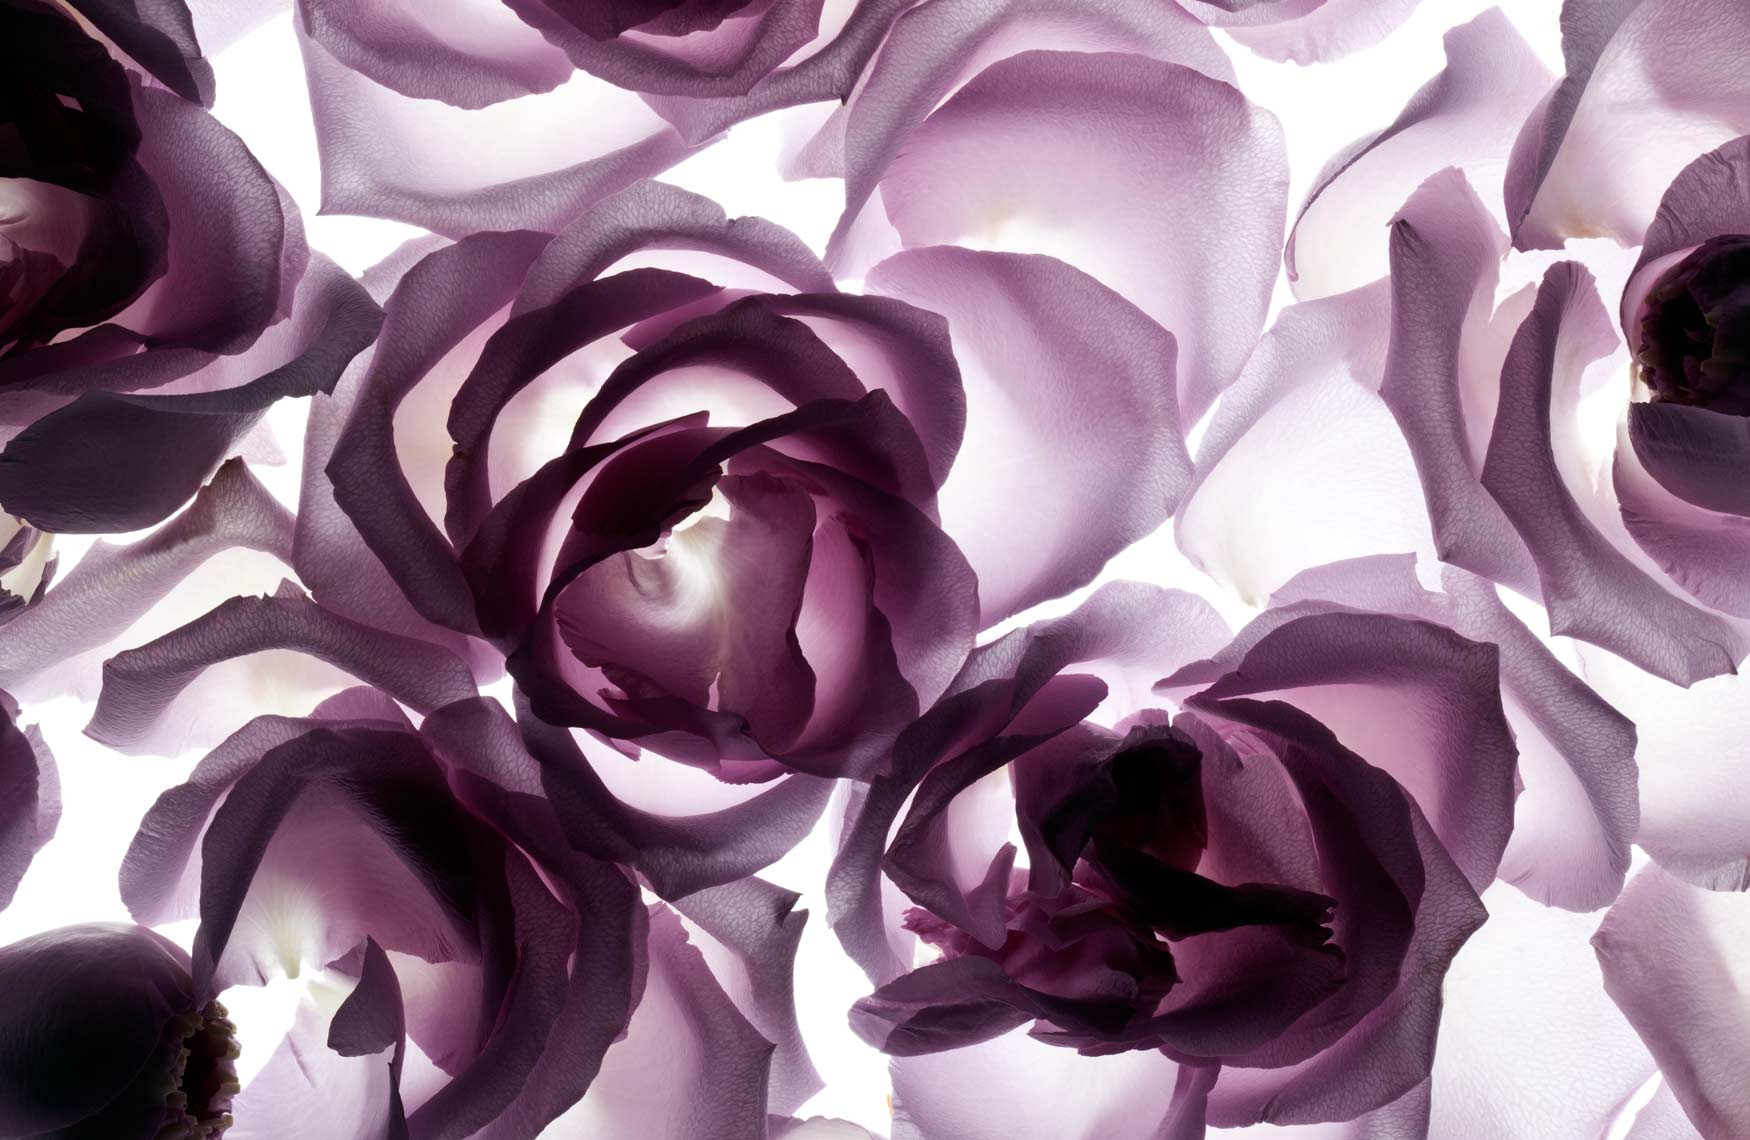 SW_Portfolio-layout_lavender-rose-petal-spread.jpg